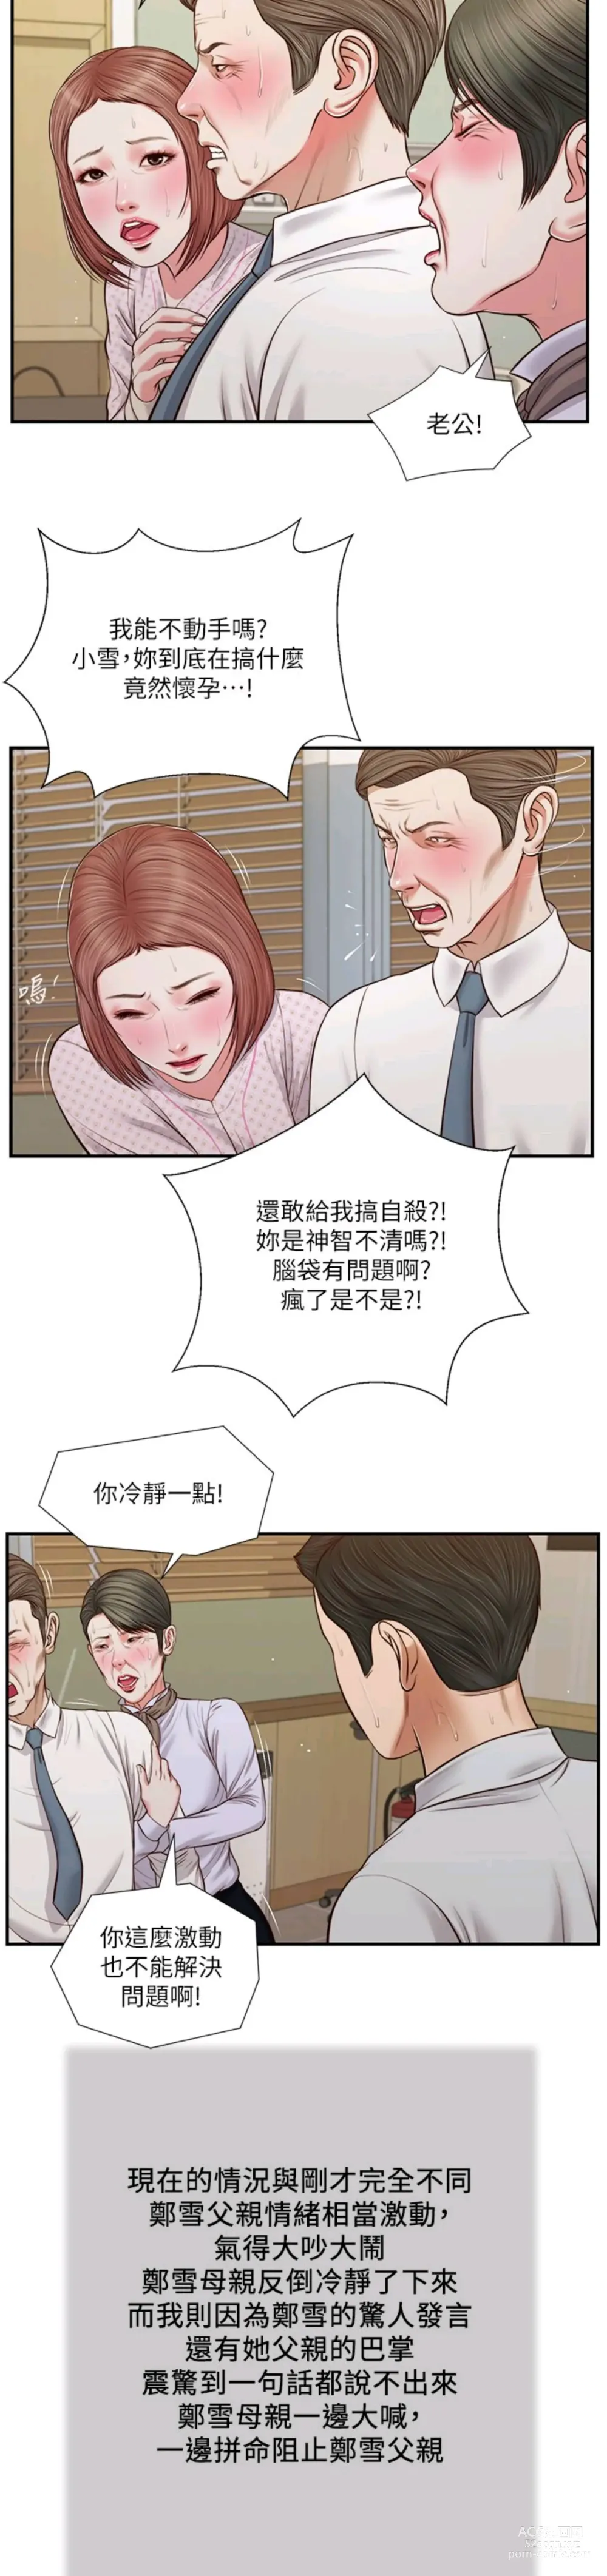 Page 1757 of manga 小妾 1-70话